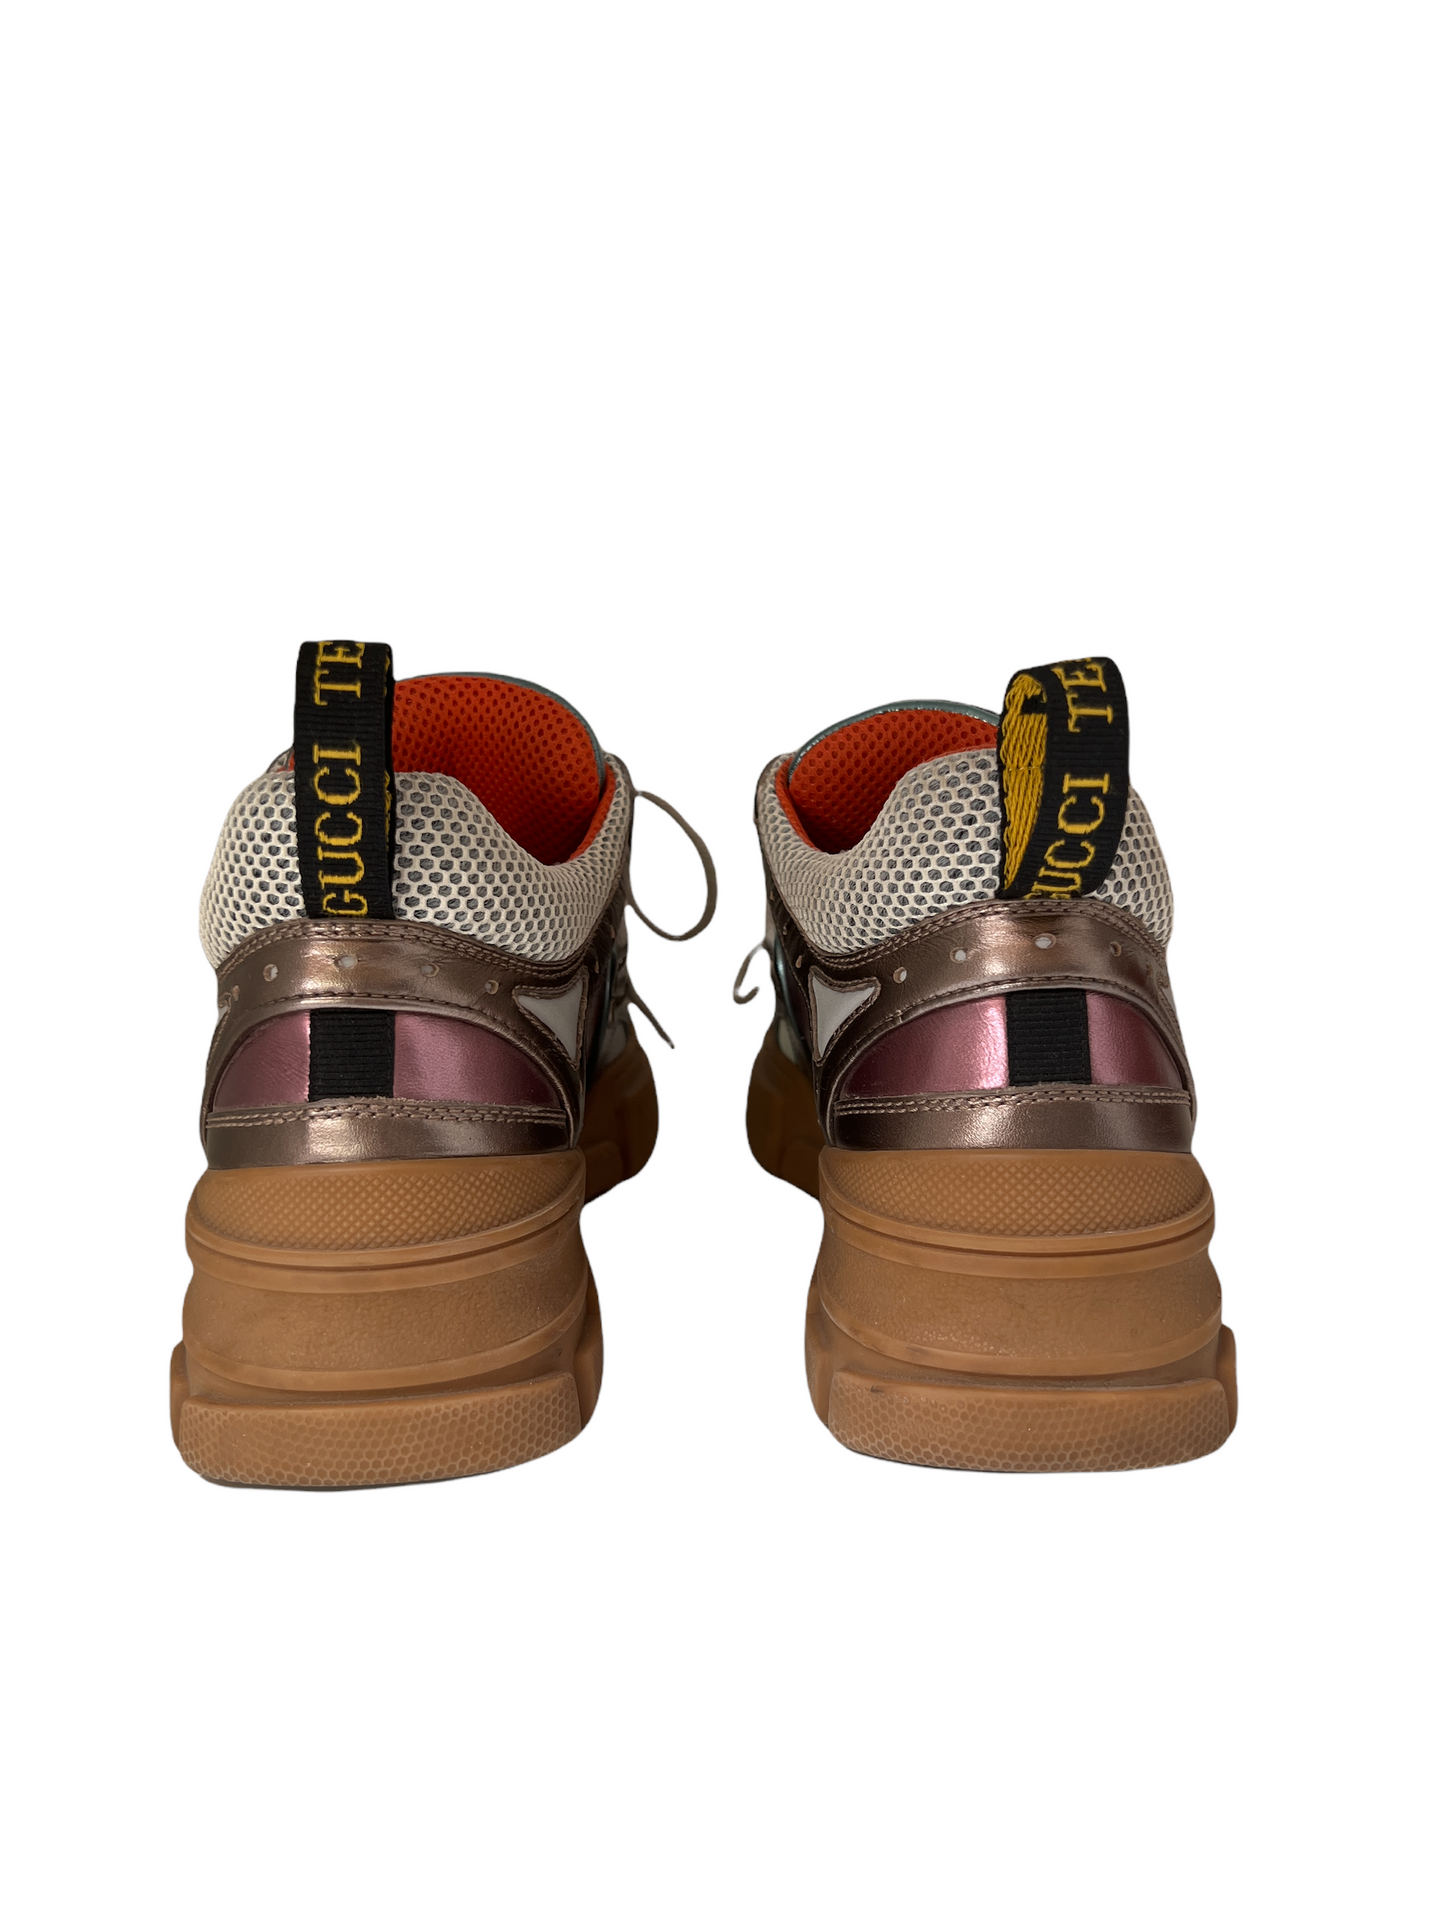 FlashTrek Sneaker Boots - 7.5